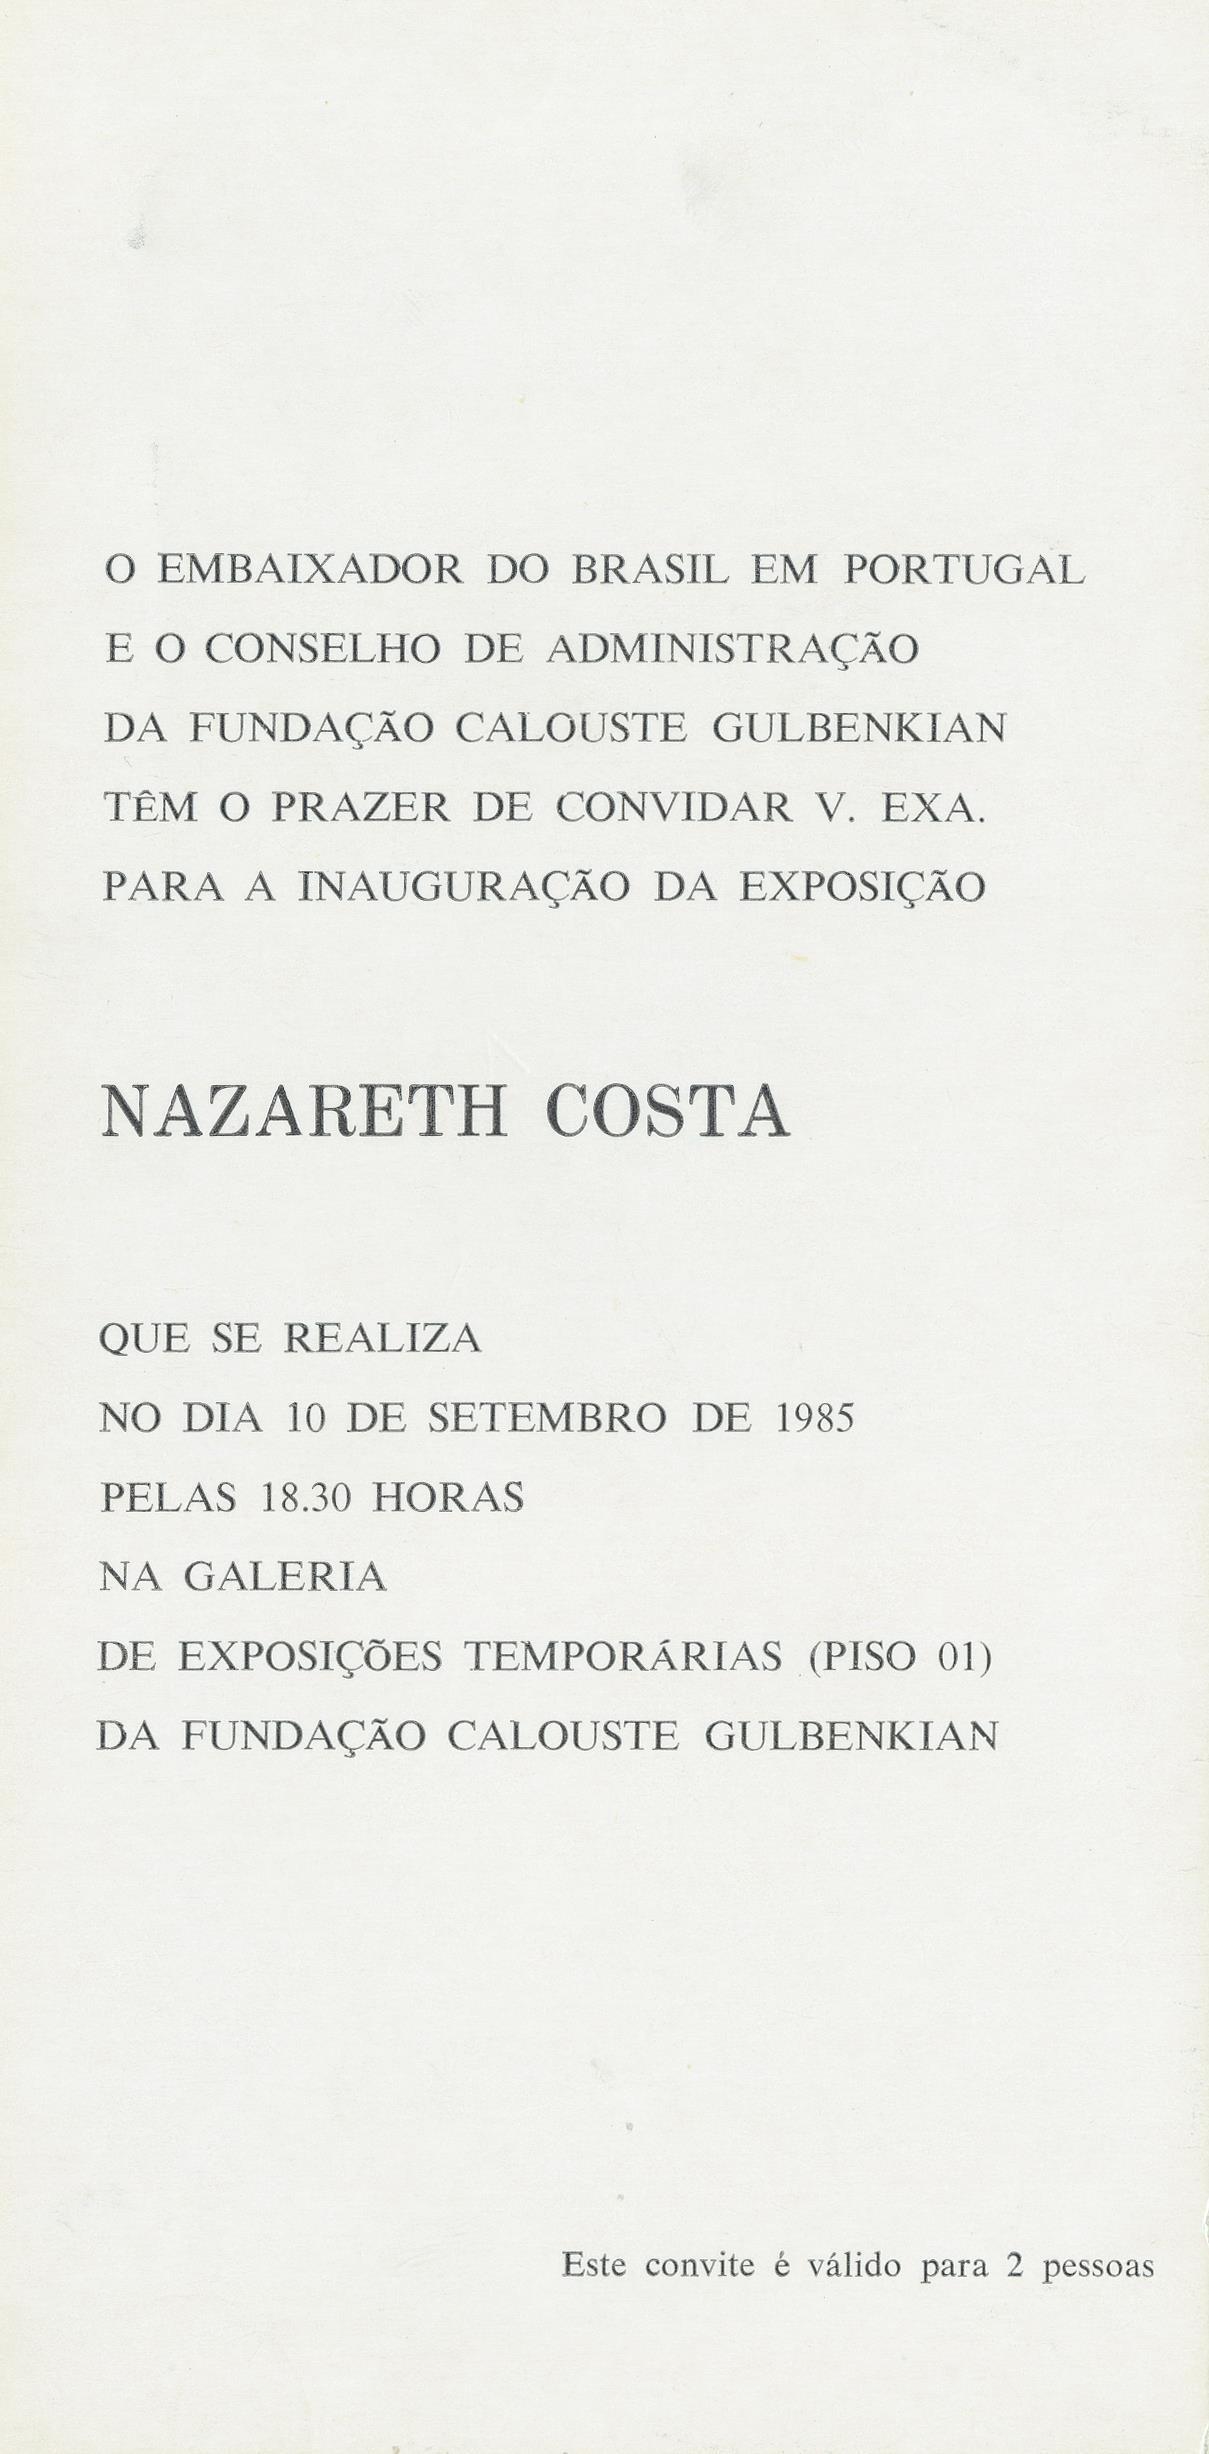 Nazareth Costa